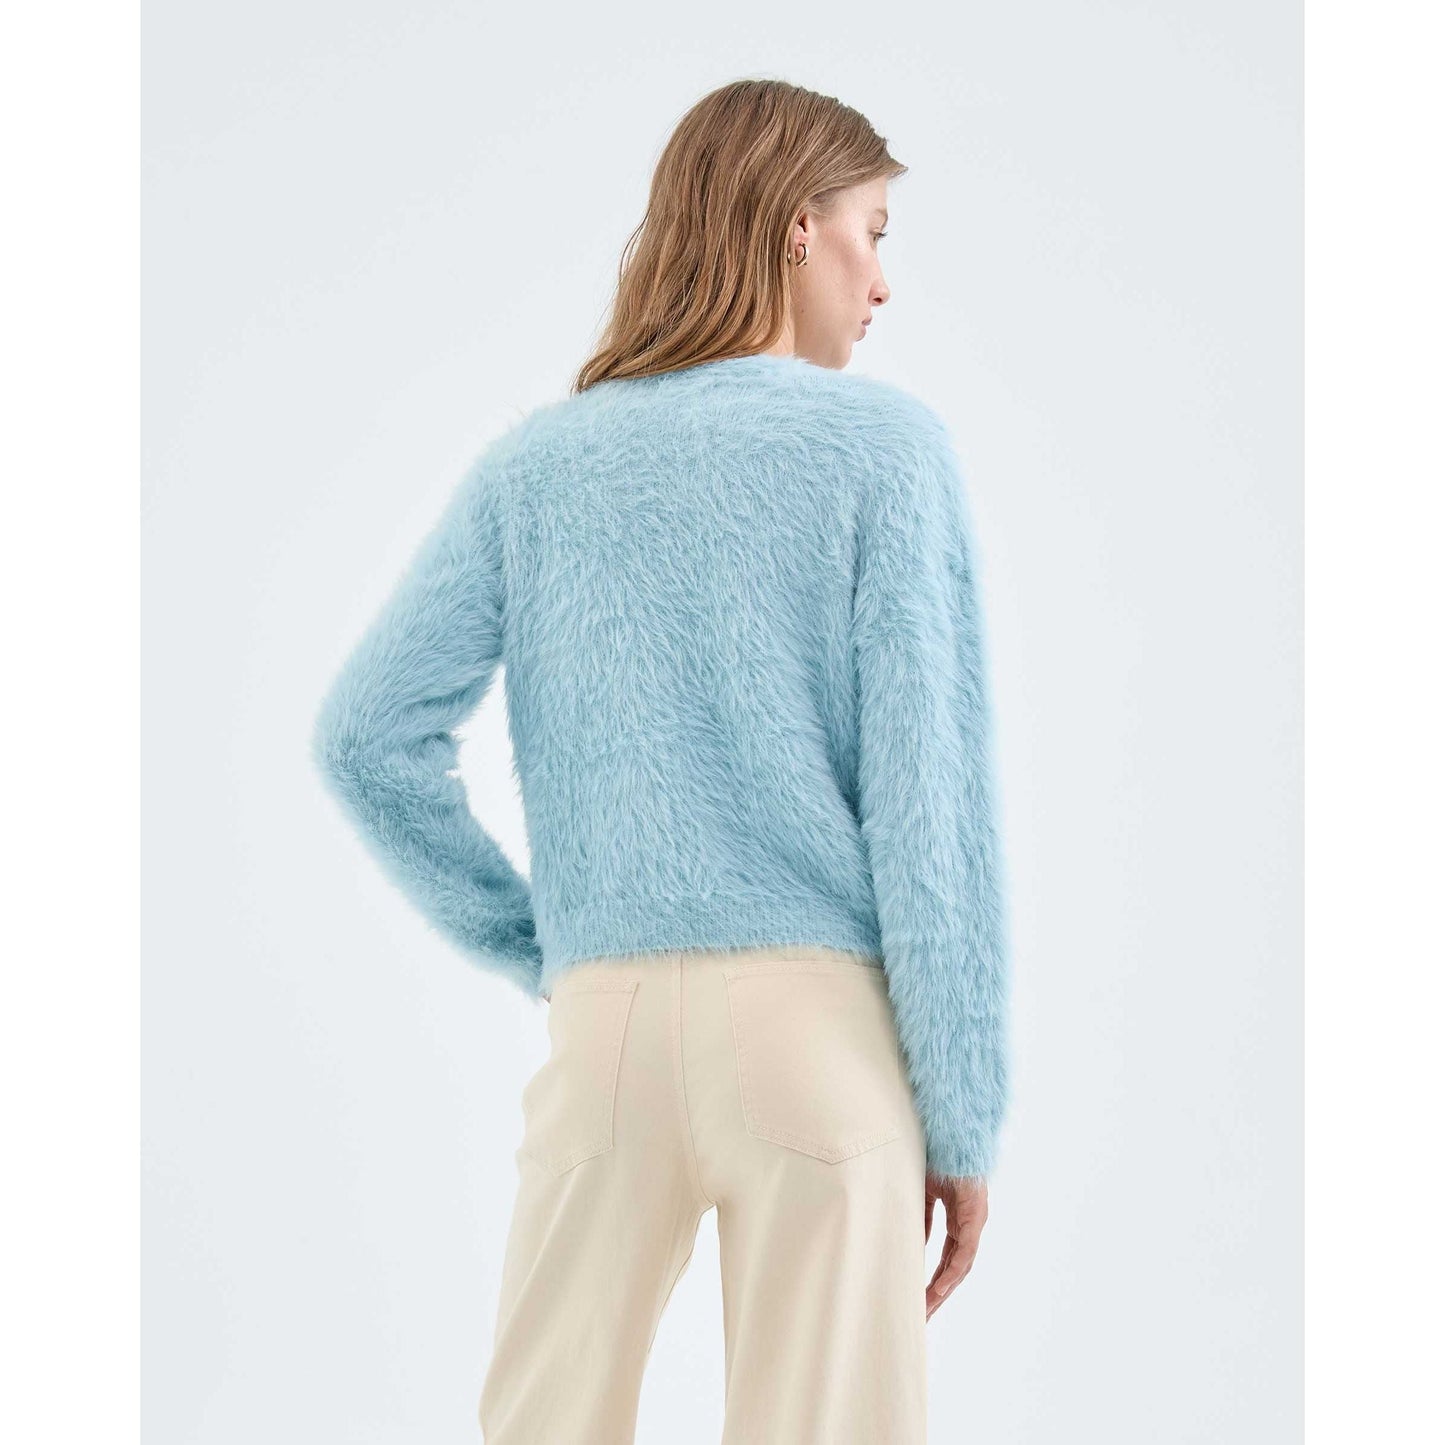 Compania Fantastica - Blue textured knit Cardigan